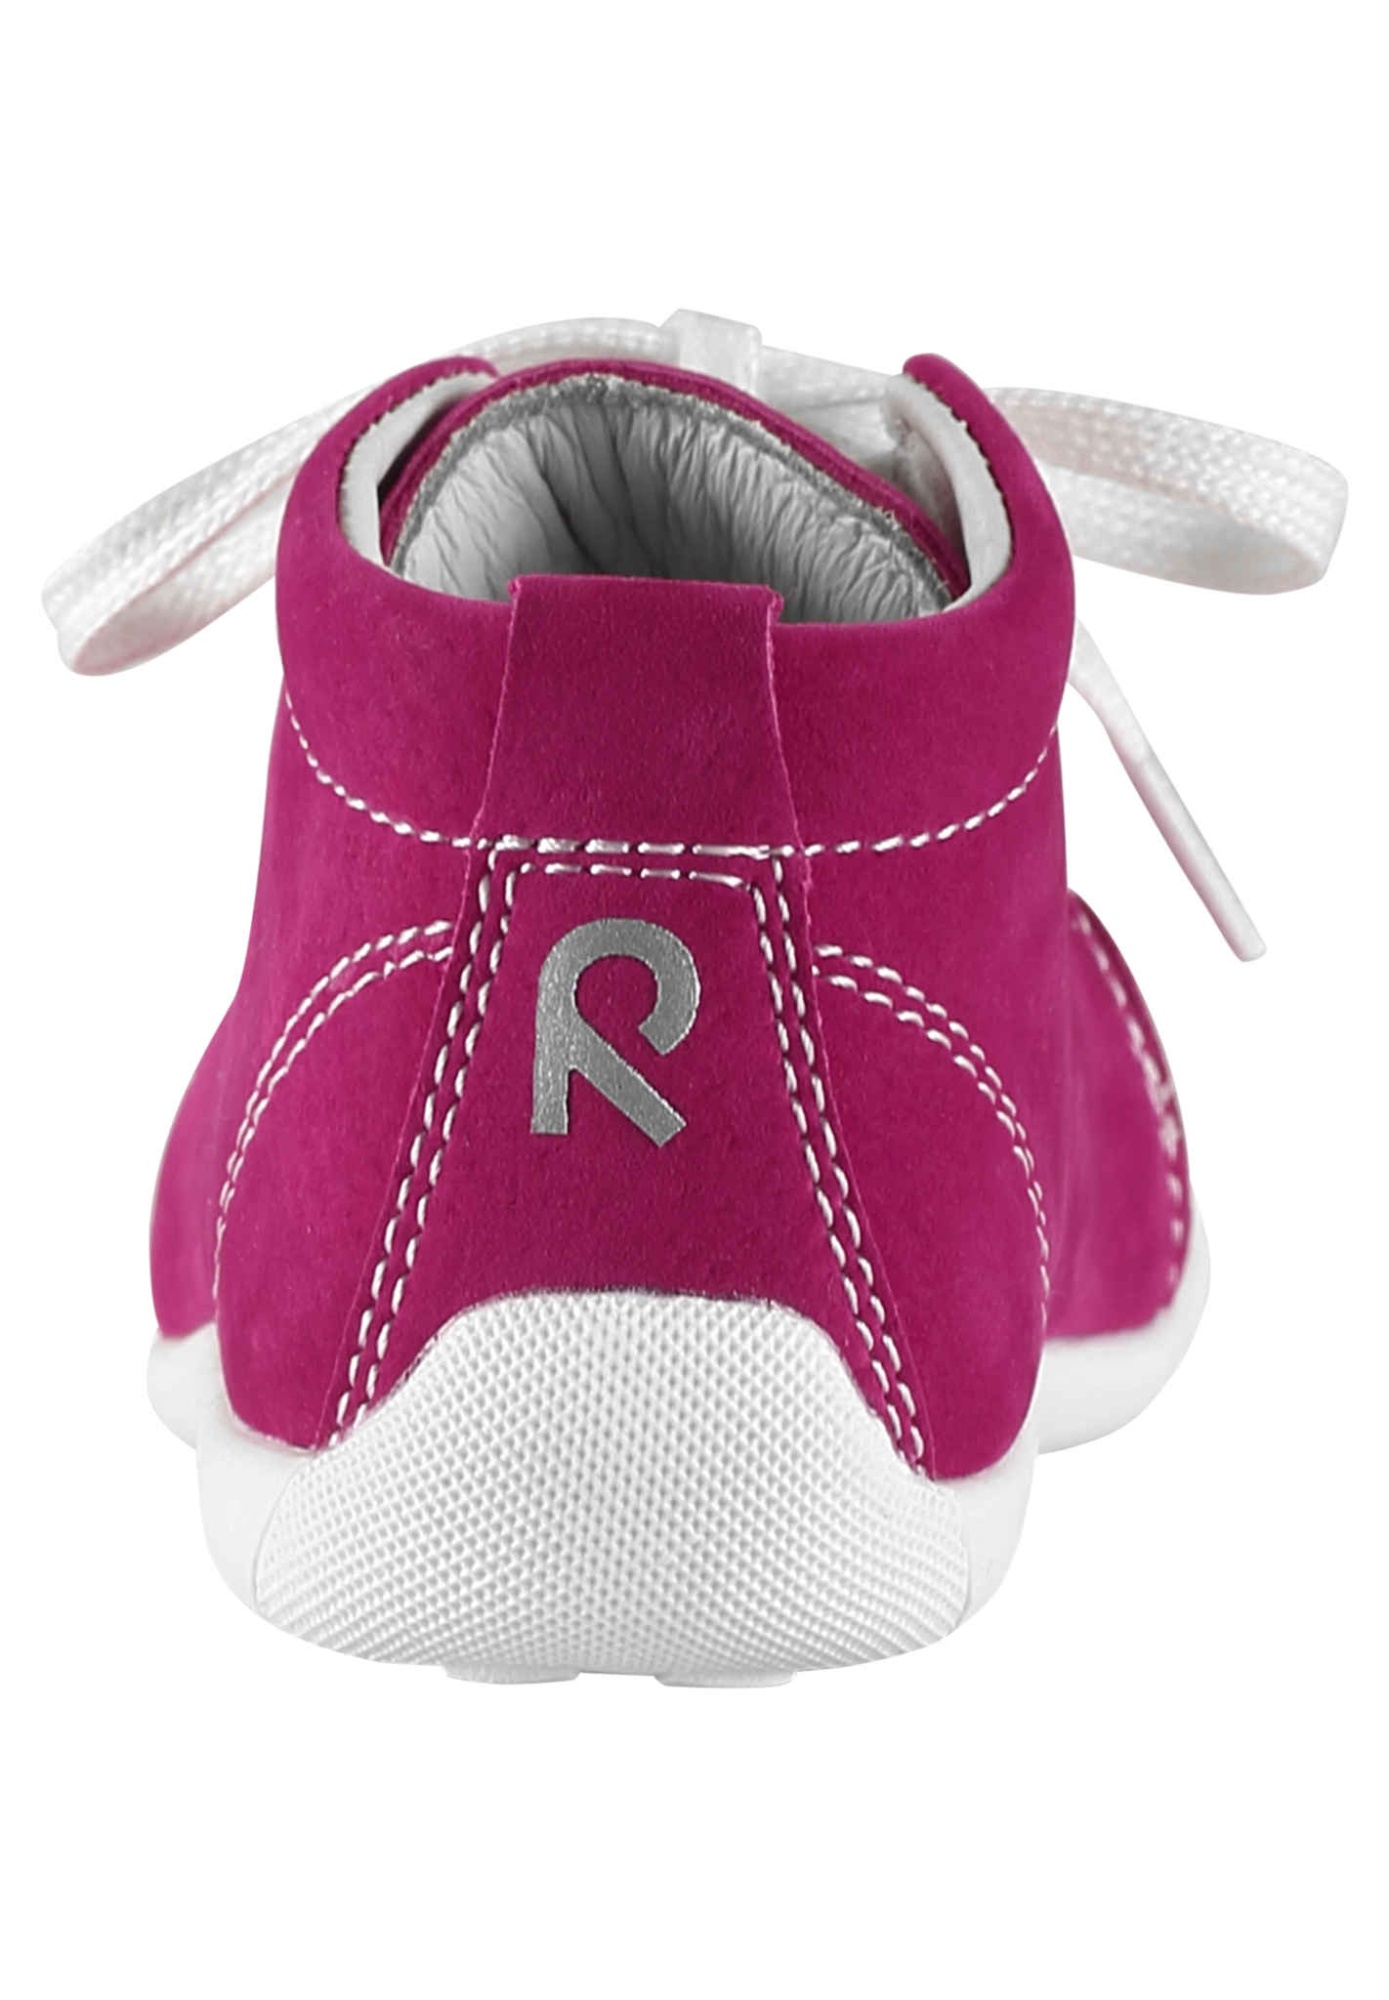 Ботинки Reima Startti Розовые | фото